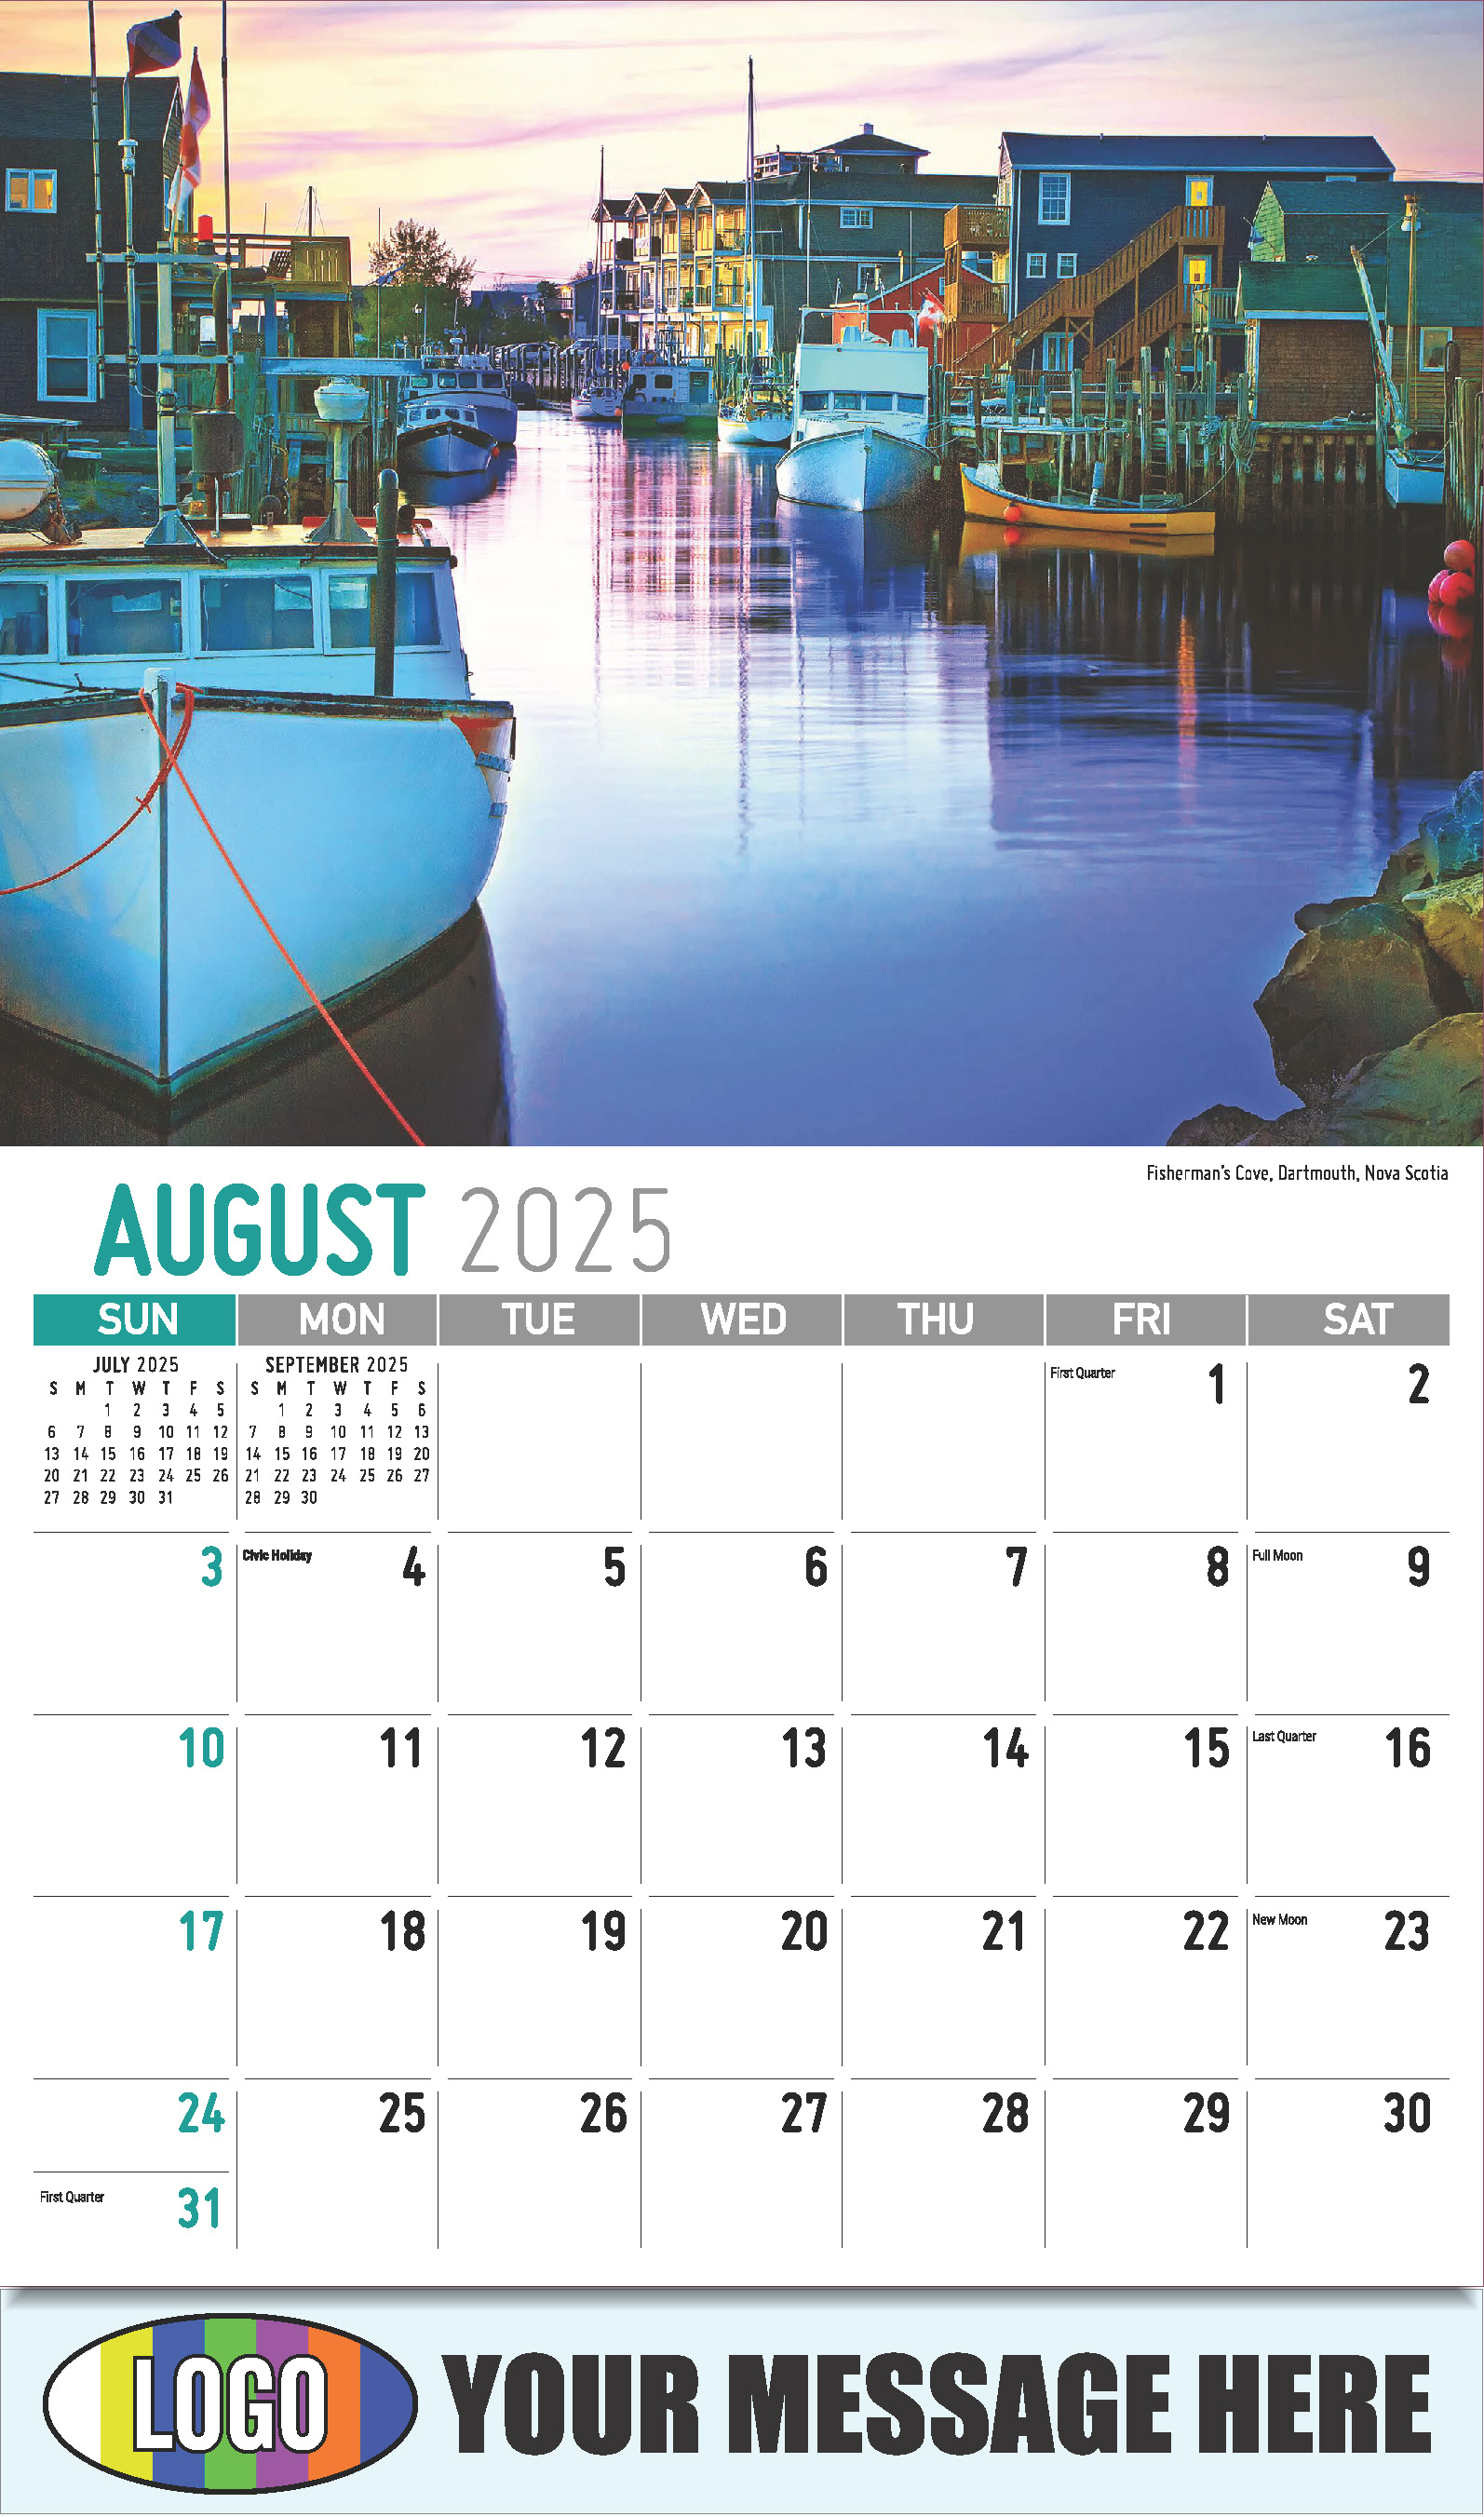 Atlantic Canada Scenic 2025 Business Promotion Calendar - August